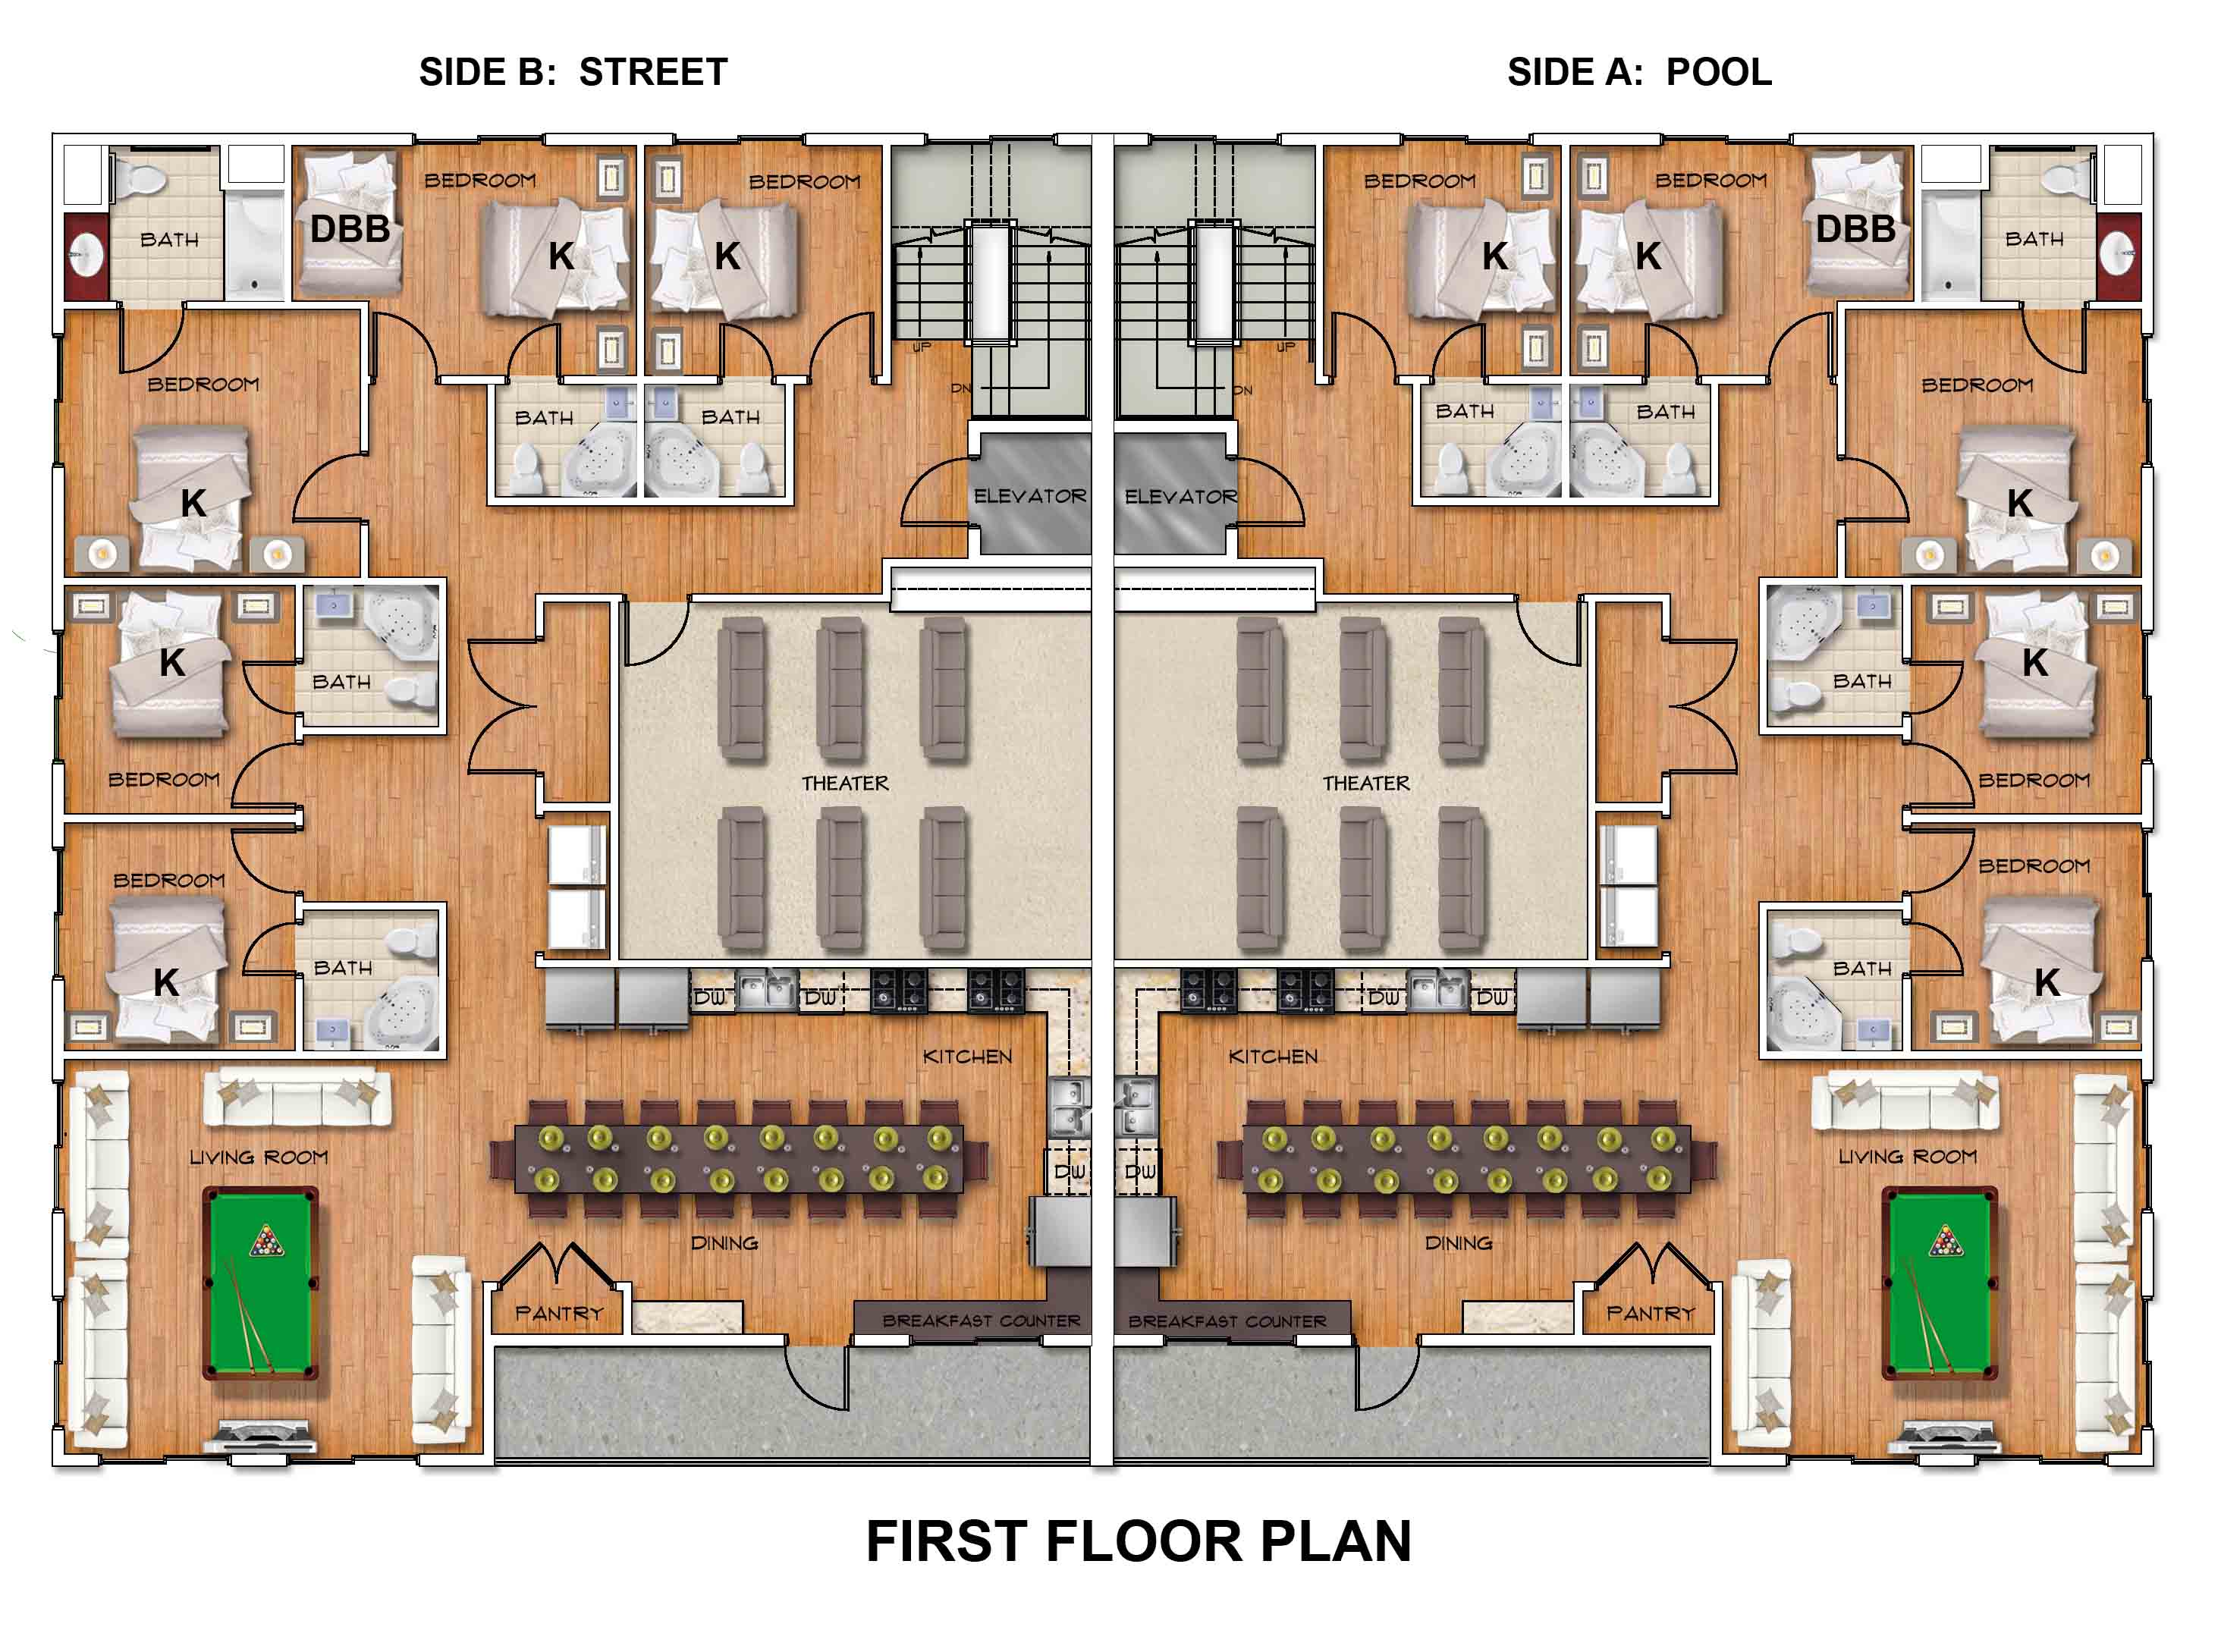 208 3rd Avenue first floor plan.